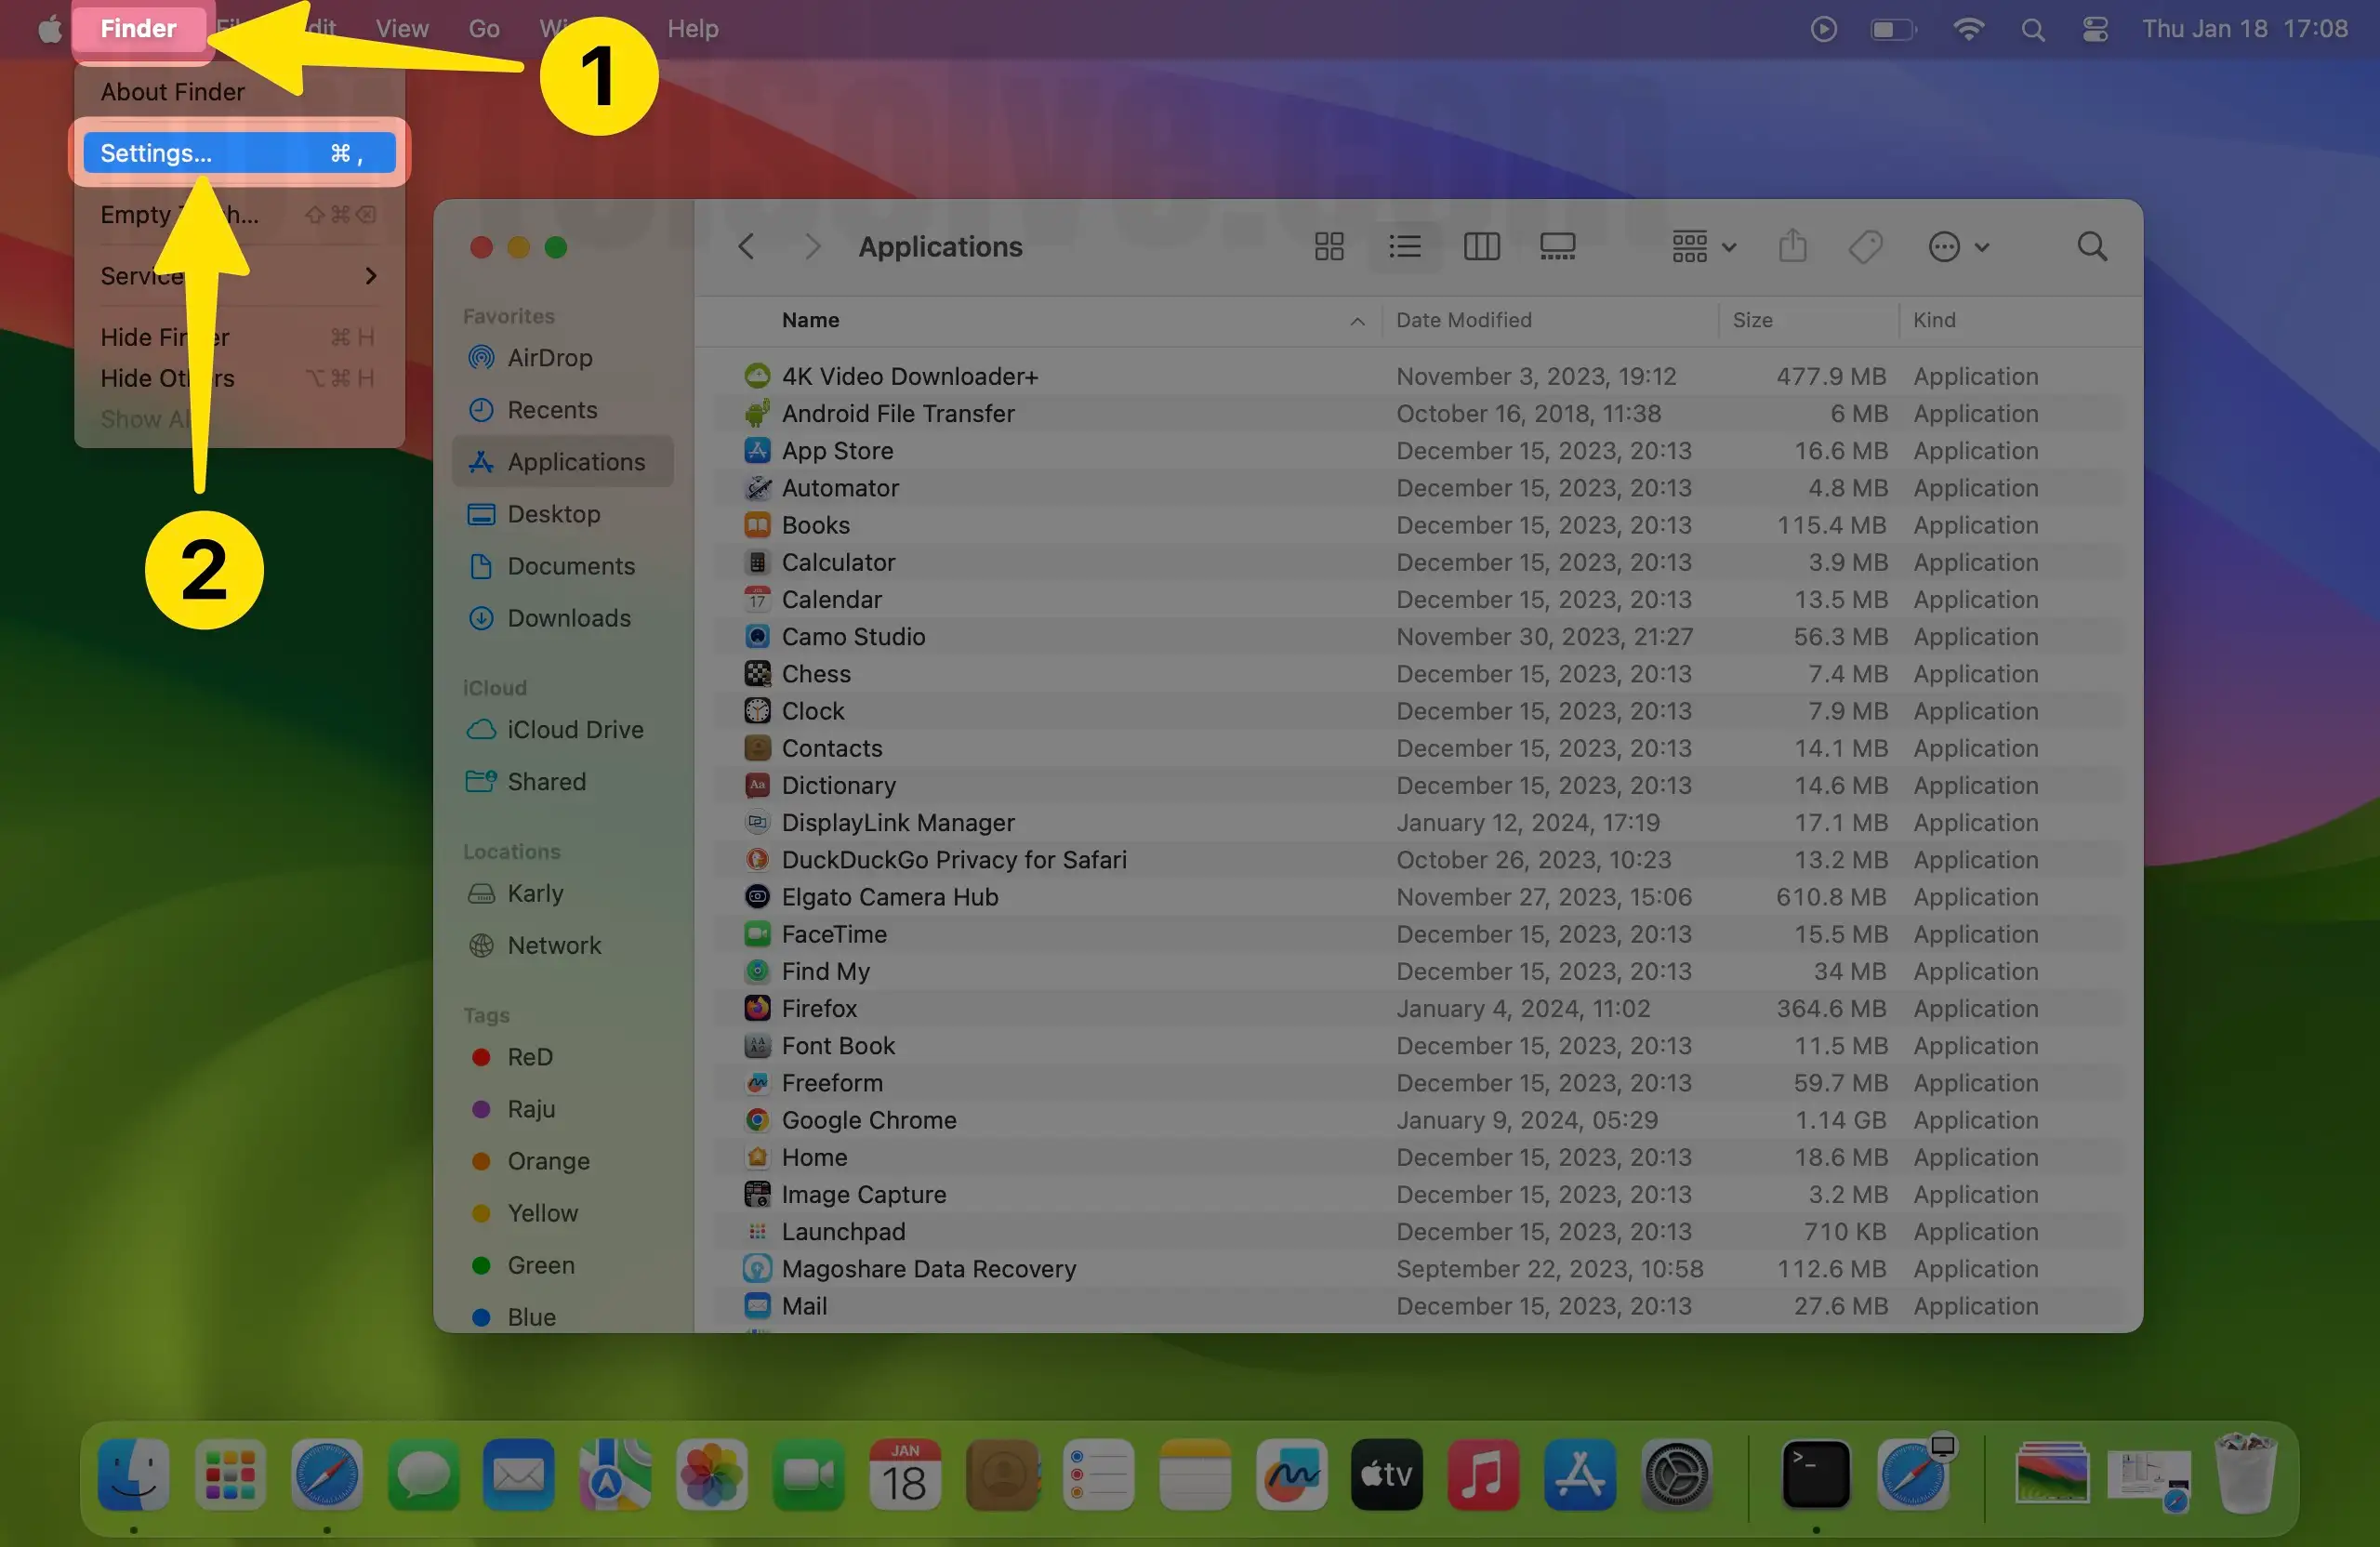 Open finder app click finder menu bar select settings... on mac